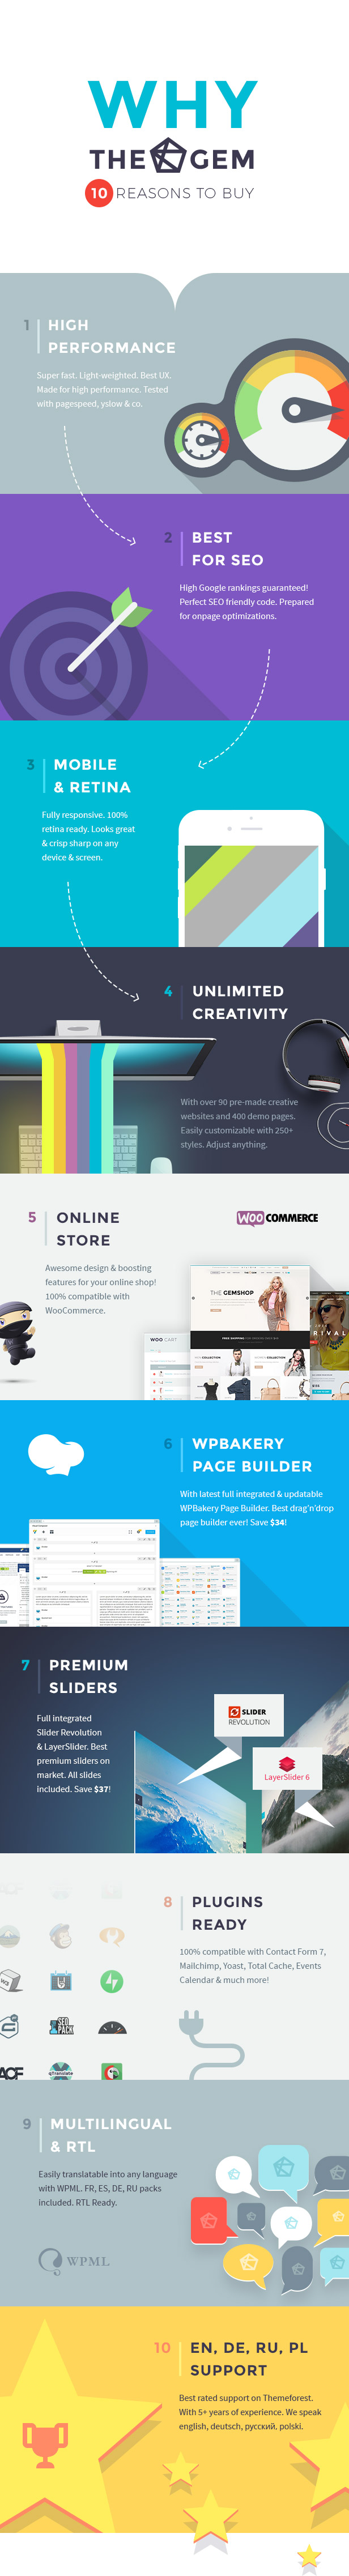 TheGem - Creative Multi-Purpose & WooCommerce WordPress Theme - 7